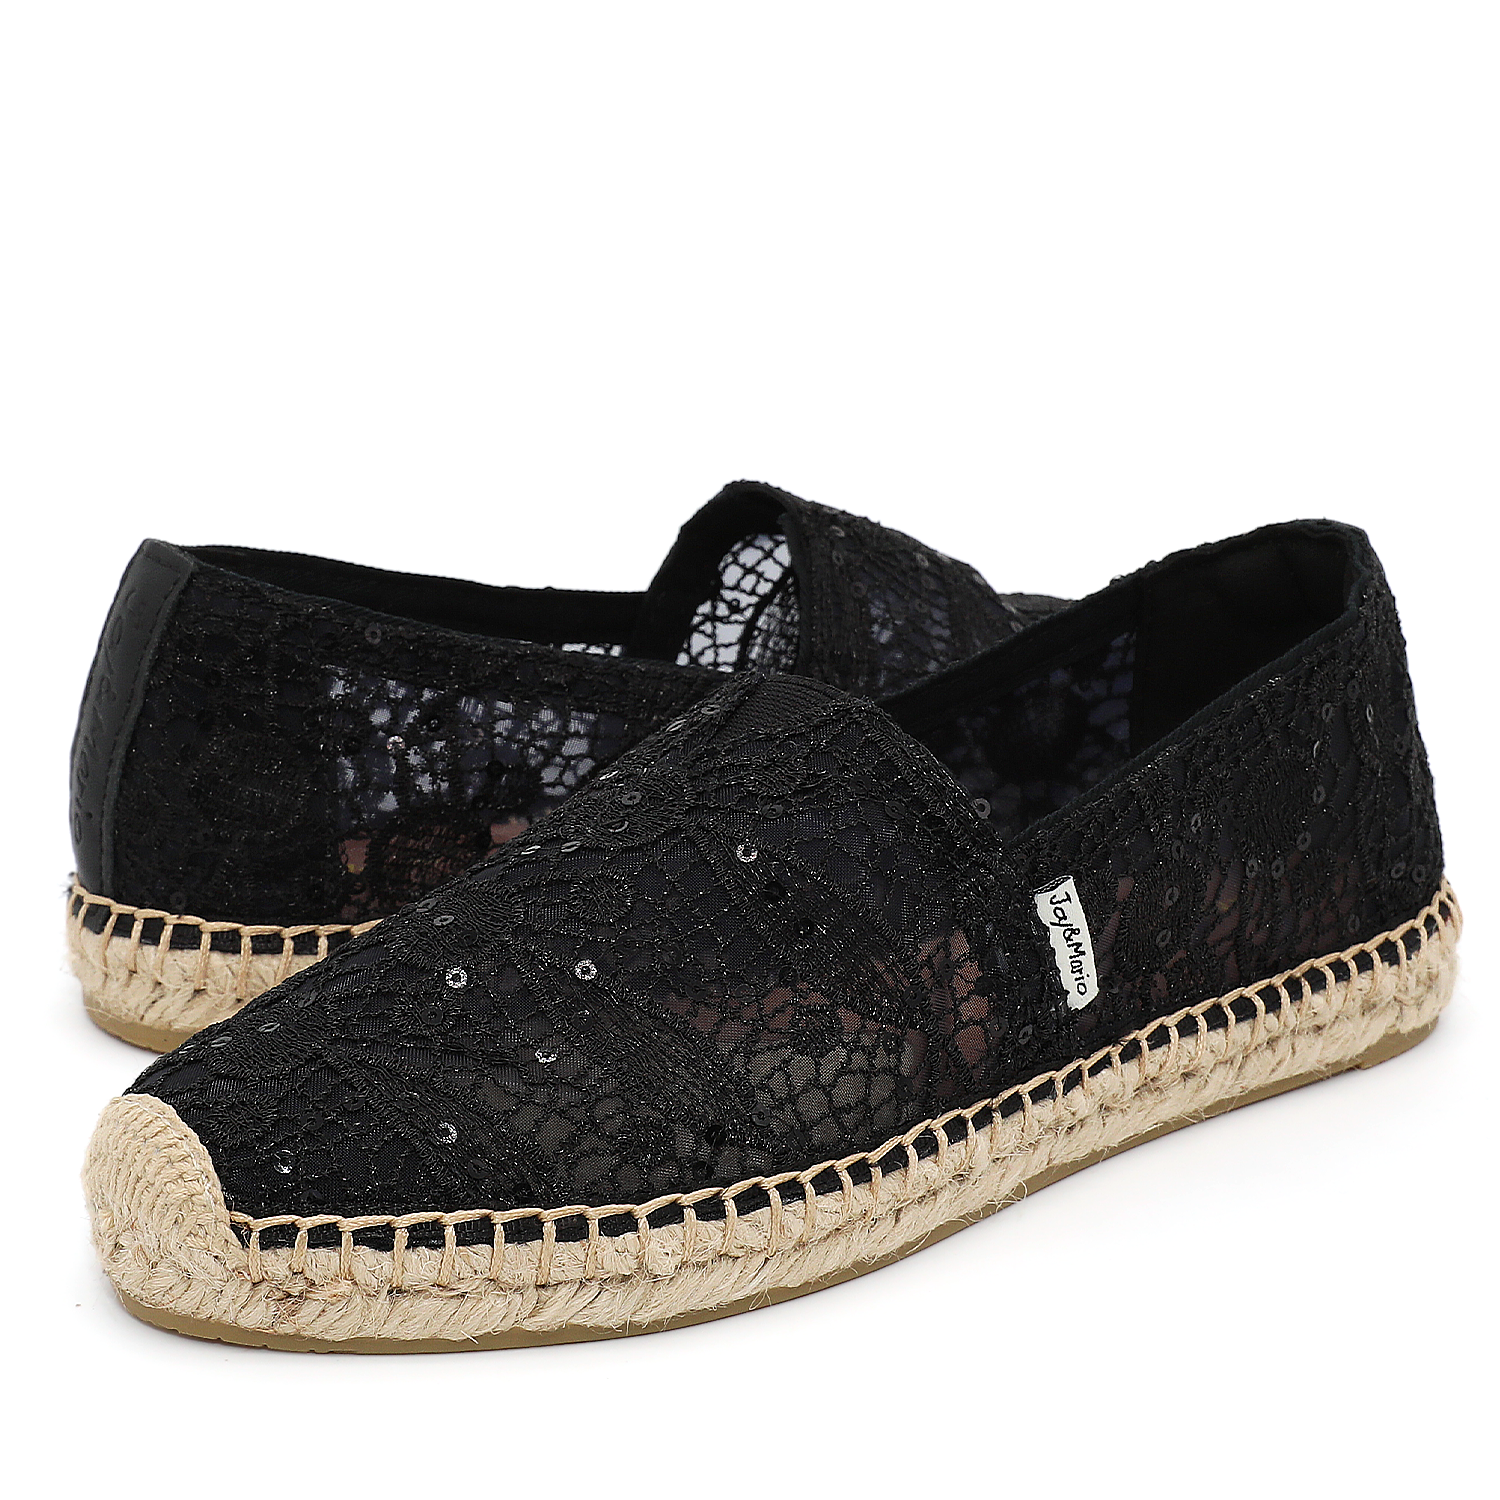 JOY&MARIO Handmade Women’s Slip-On Espadrille Mesh Loafers Flats in Black-A01961W JOYANDMARIO